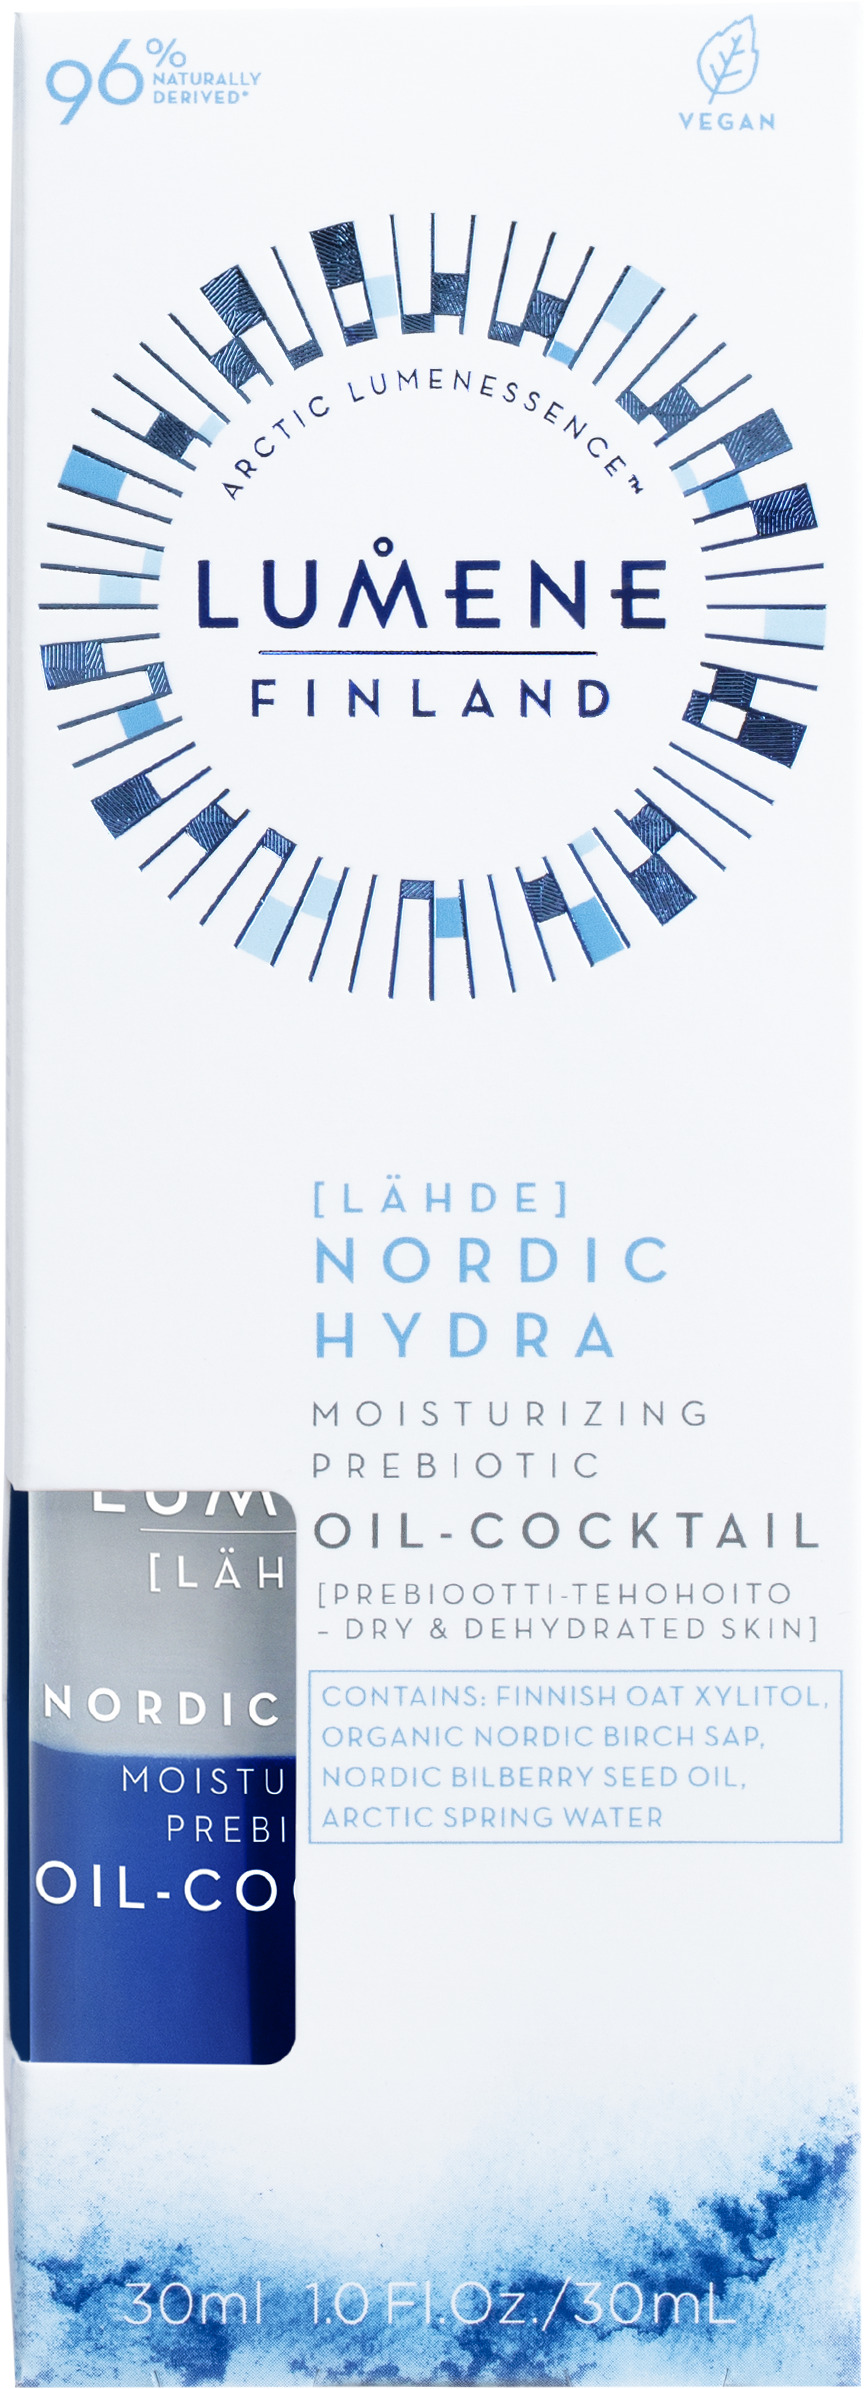 Nordic Hydra Moisturizing Prebiotic Oil-Cocktail